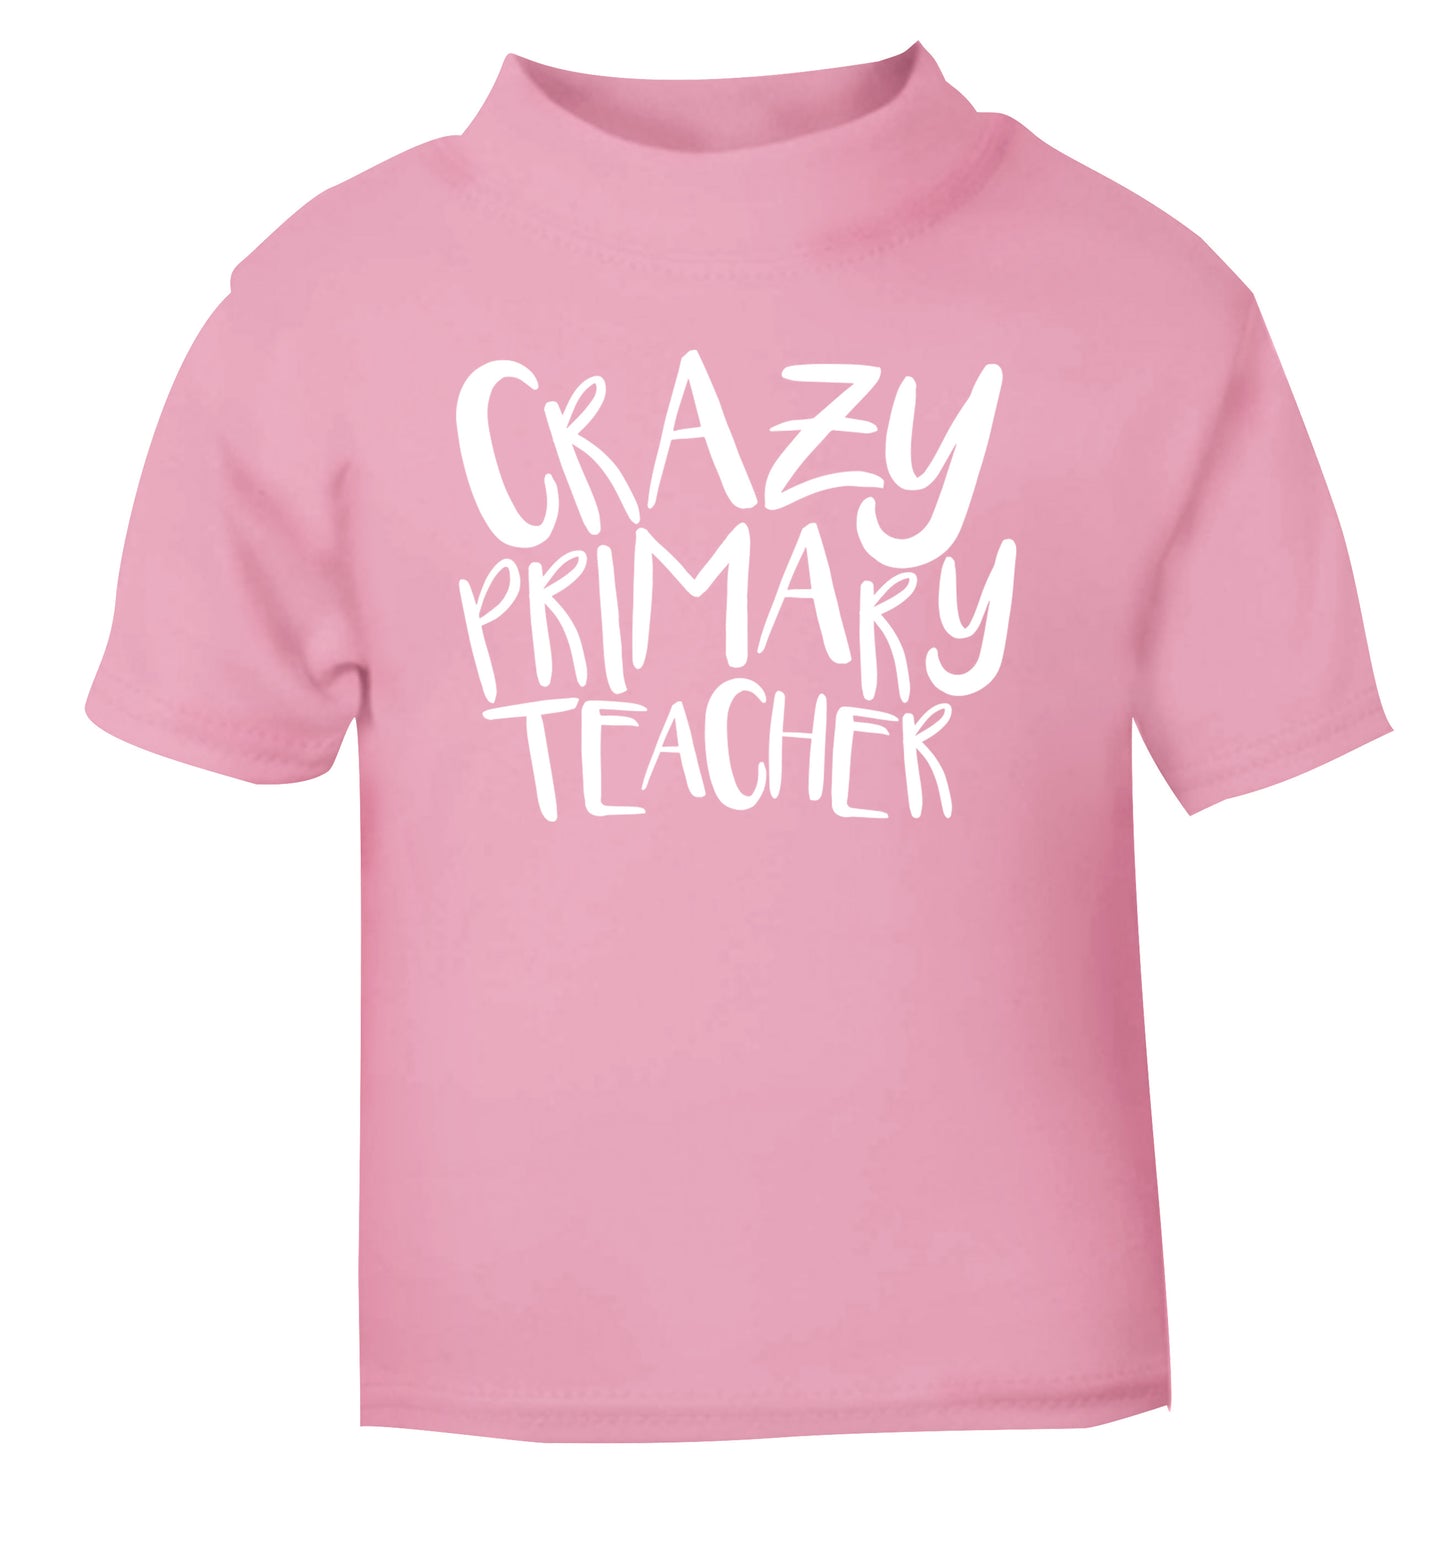 Crazy primary teacher light pink Baby Toddler Tshirt 2 Years